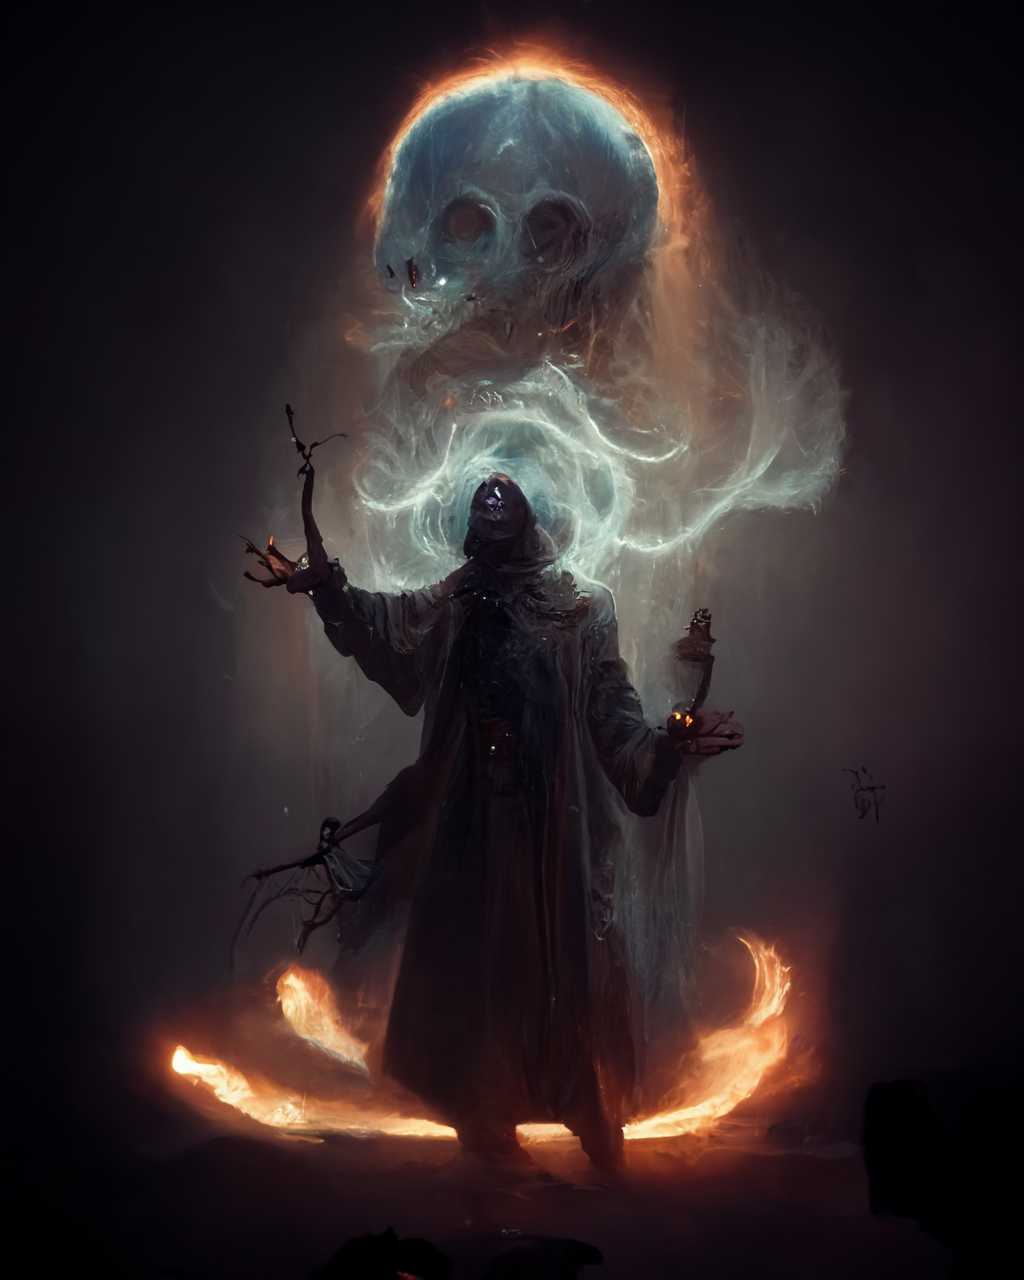 A necromancer casting a skull magic